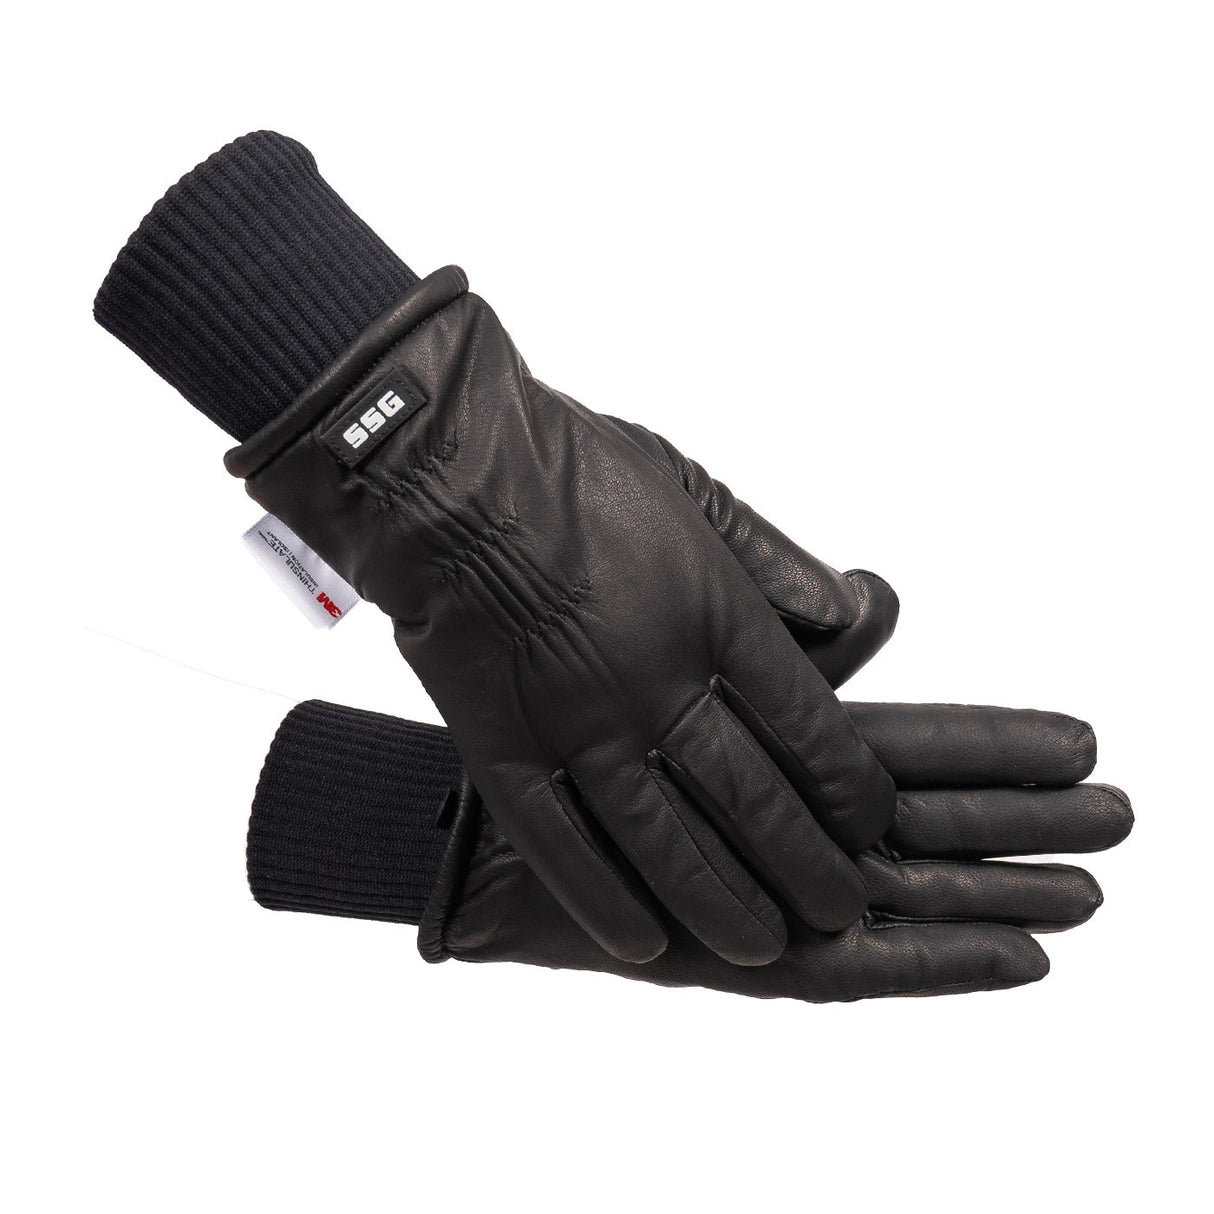 SSG 6000 Winter Training Gloves